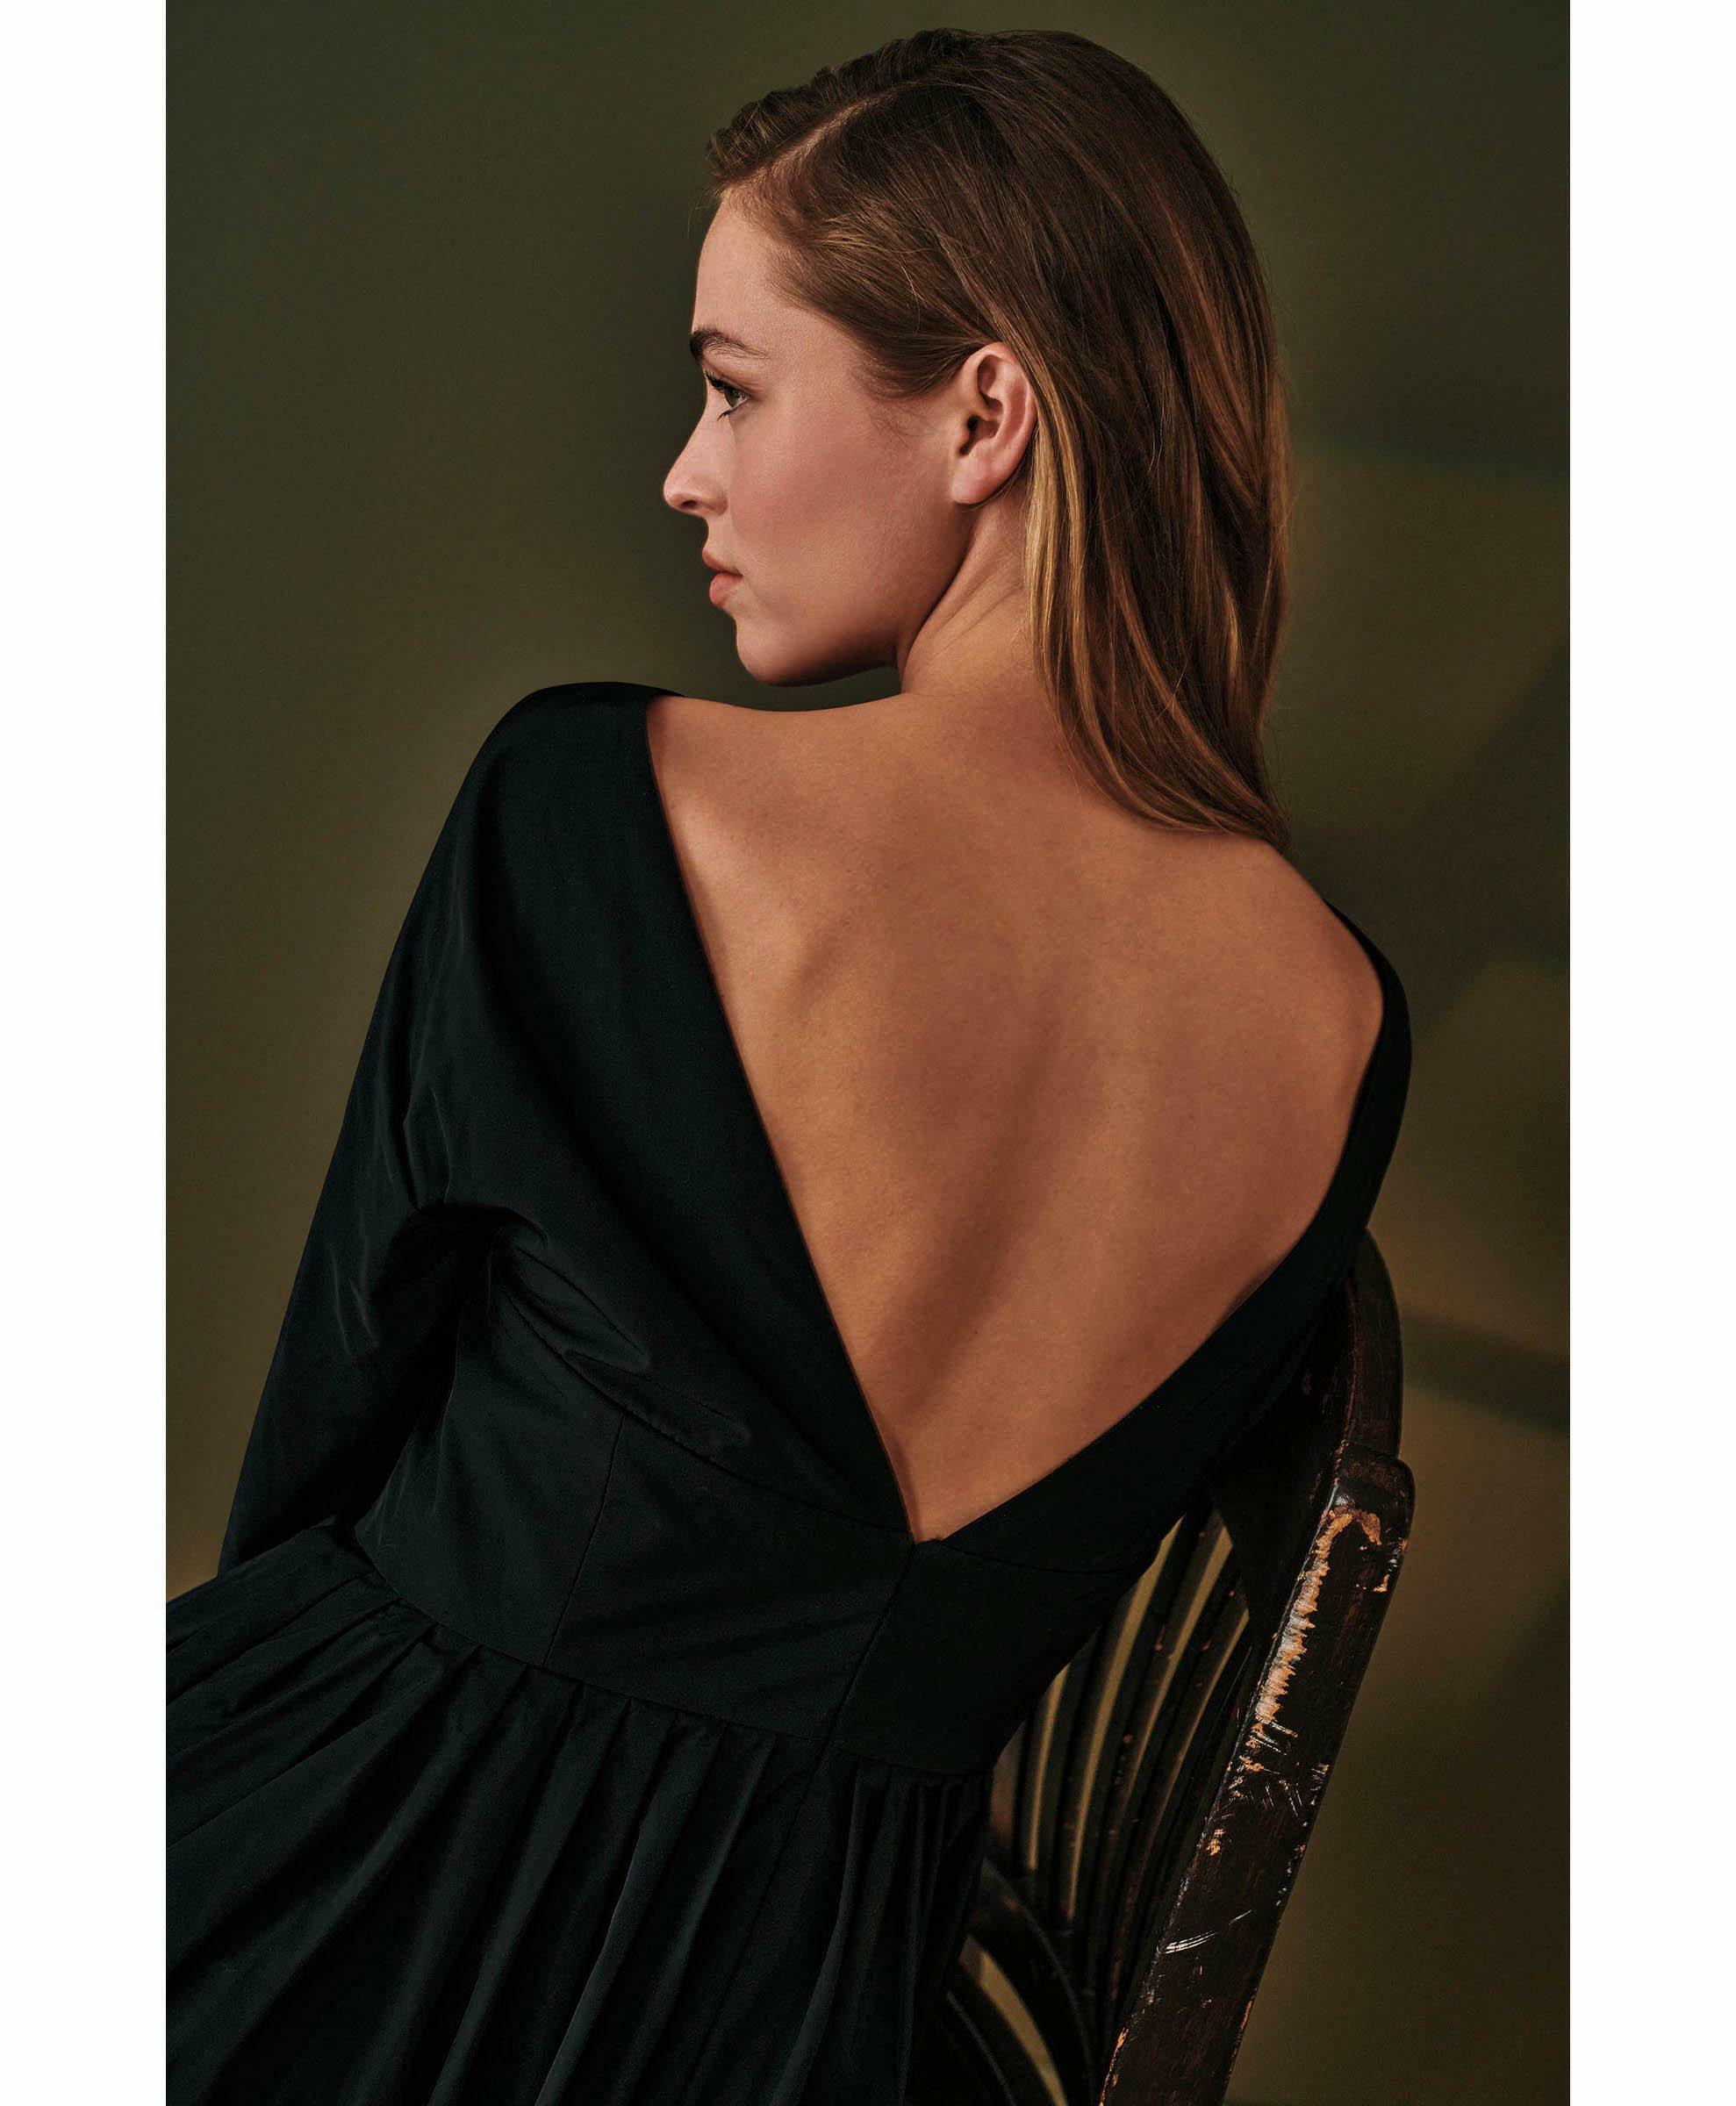 Brooks Brothers Women's Taffeta Pleated Dress | Black